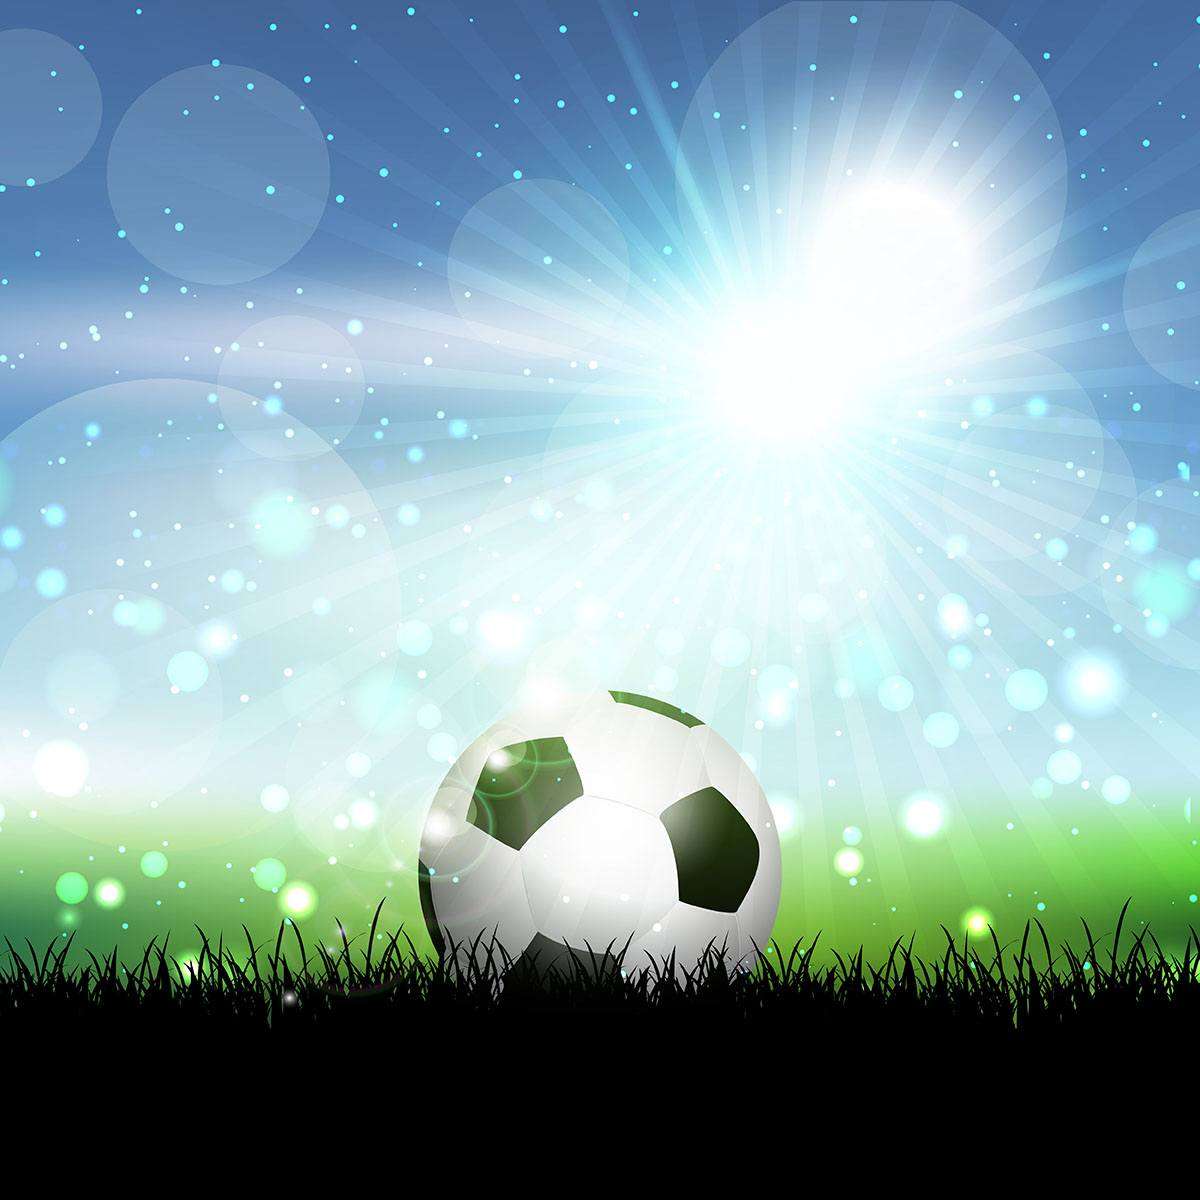 Soccer ball in grassy landscape